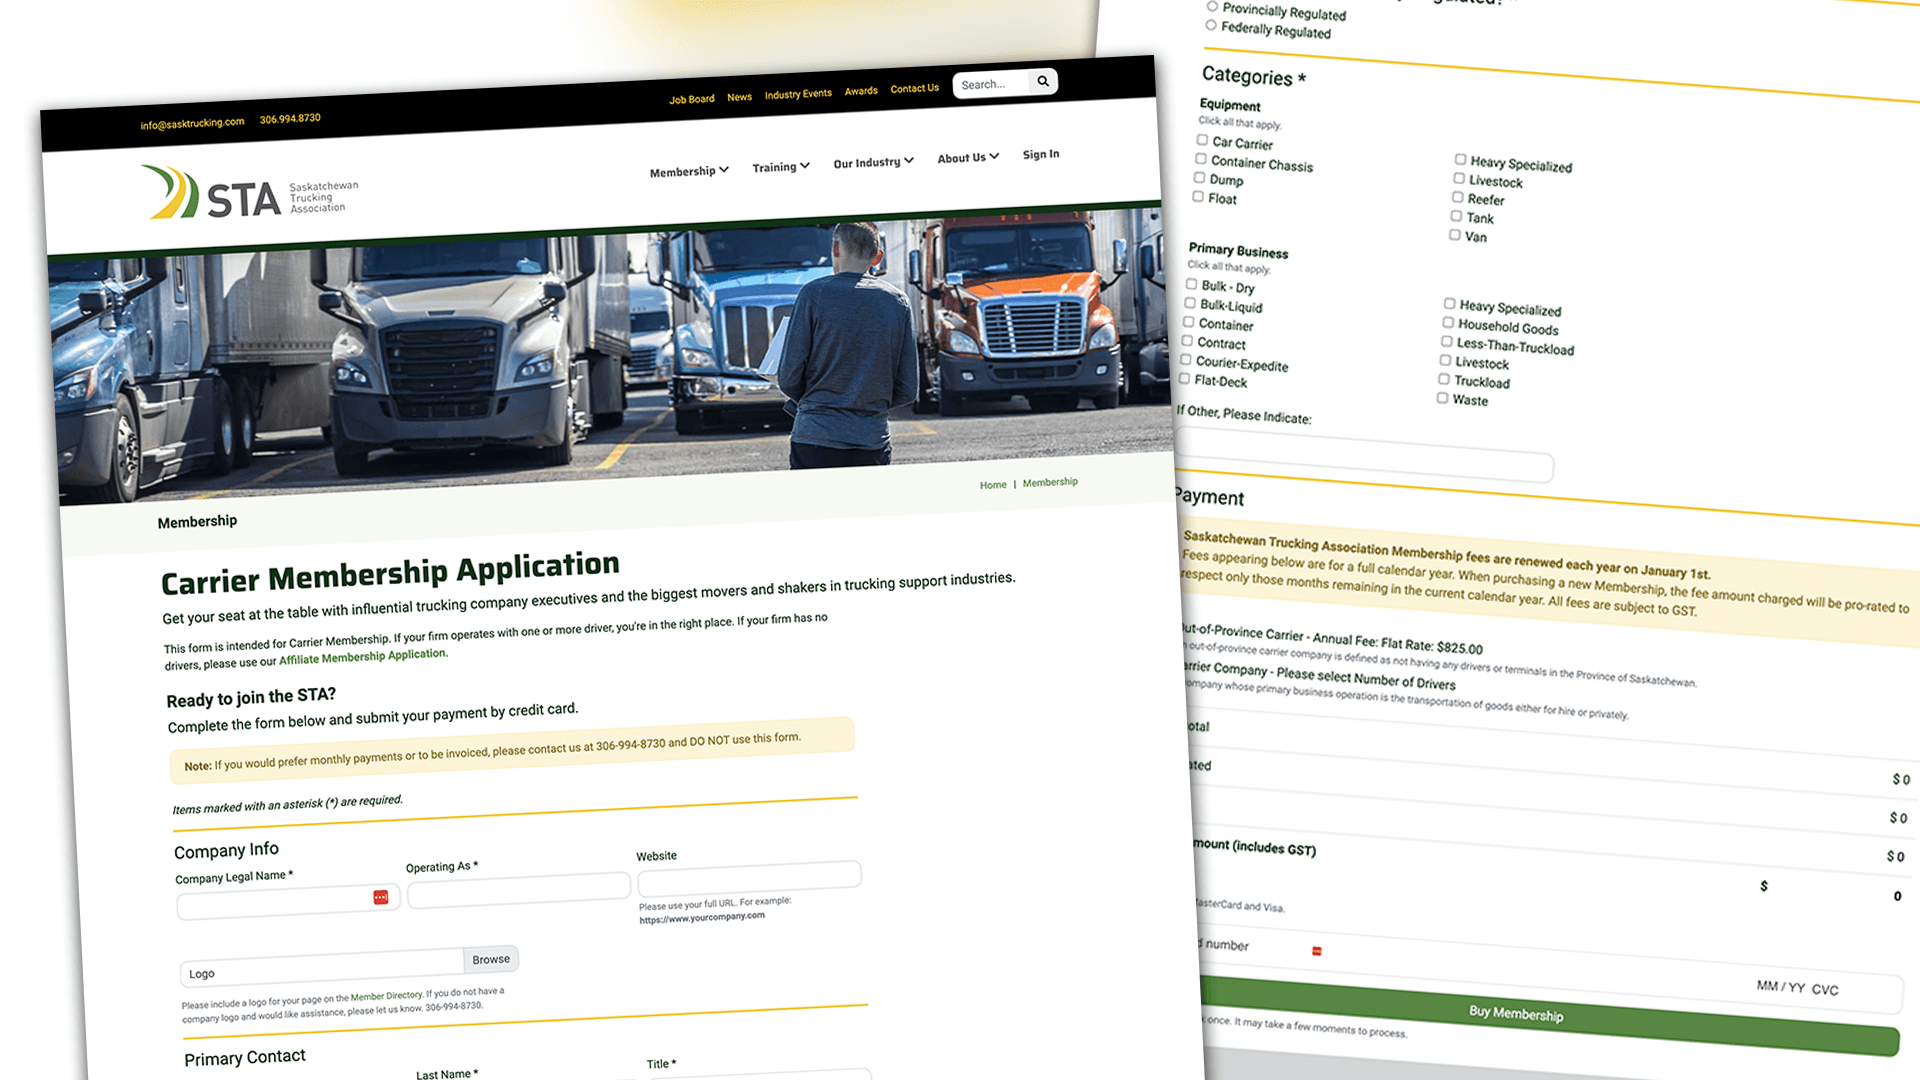 Saskatchewan Trucking Association, Web Apps, STA Membership Application and Renewal Web App, Portfolio Image, 